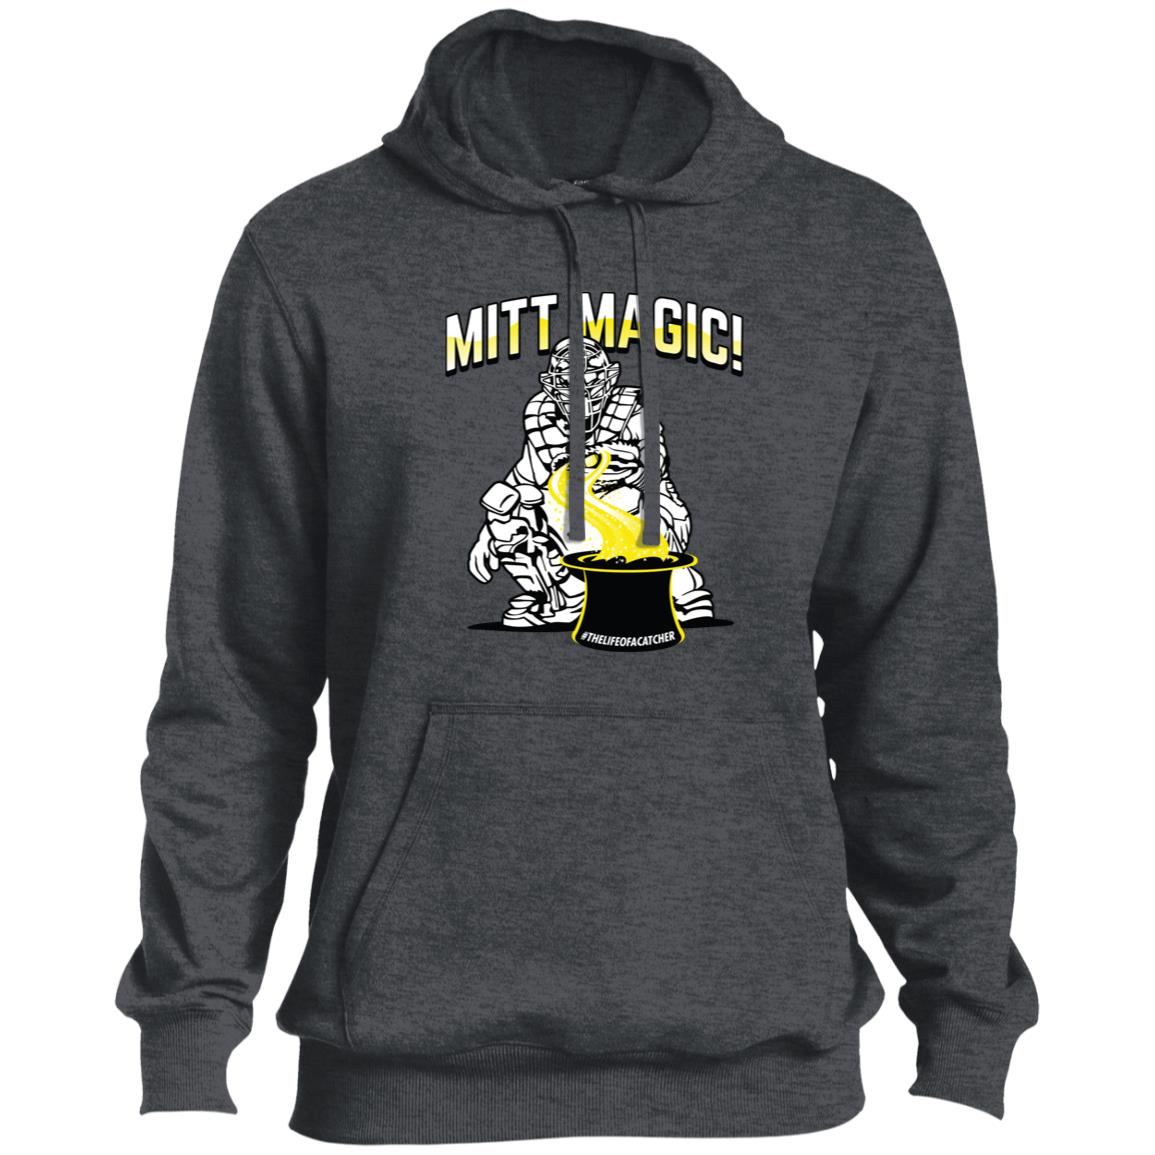 The Catching Guy Mitt Magic Pullover Hoodie grey